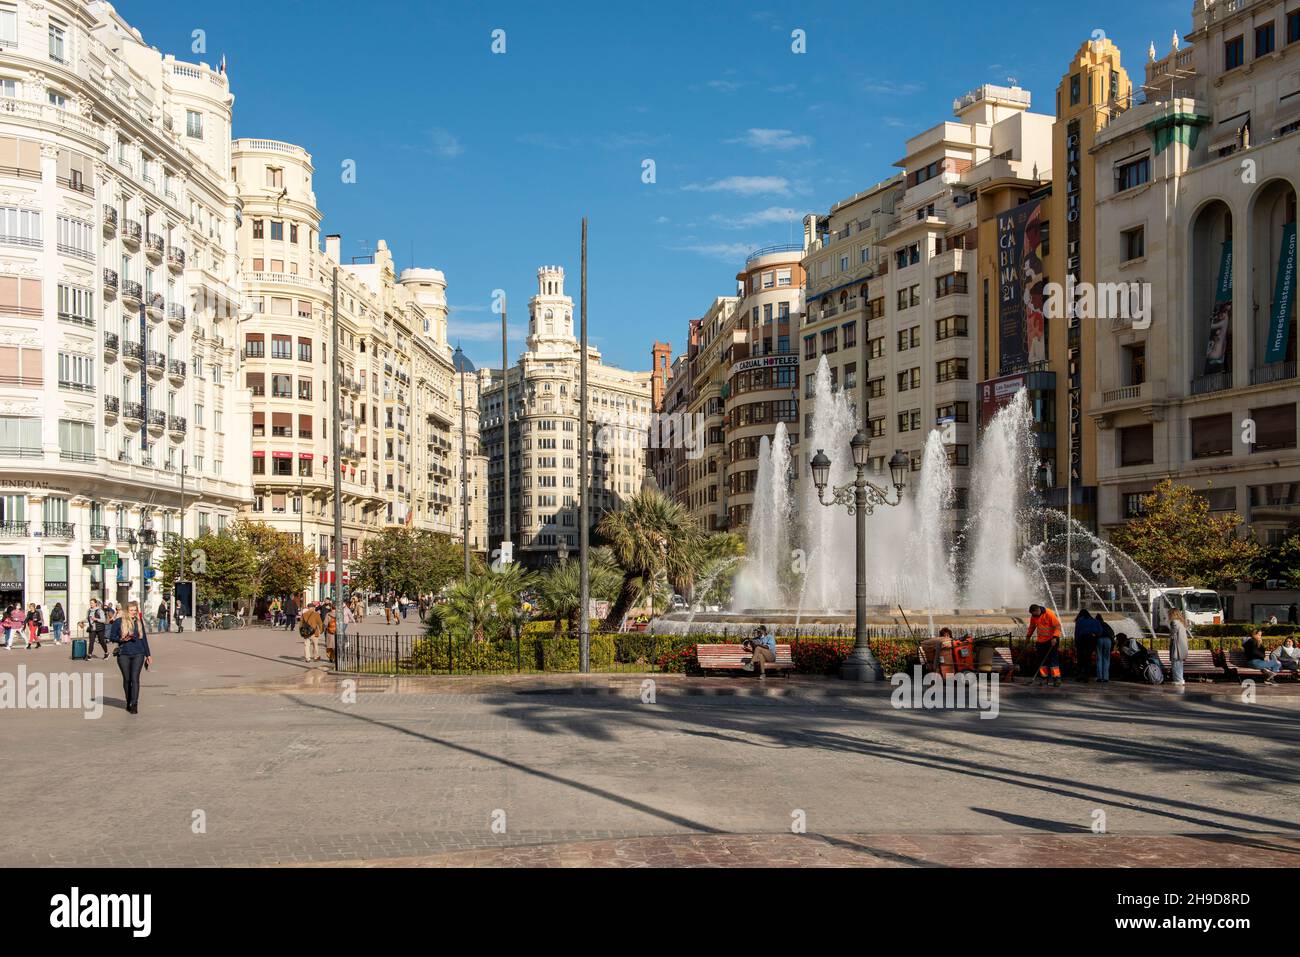 Plaza in Valencia, Spain Stock Photo